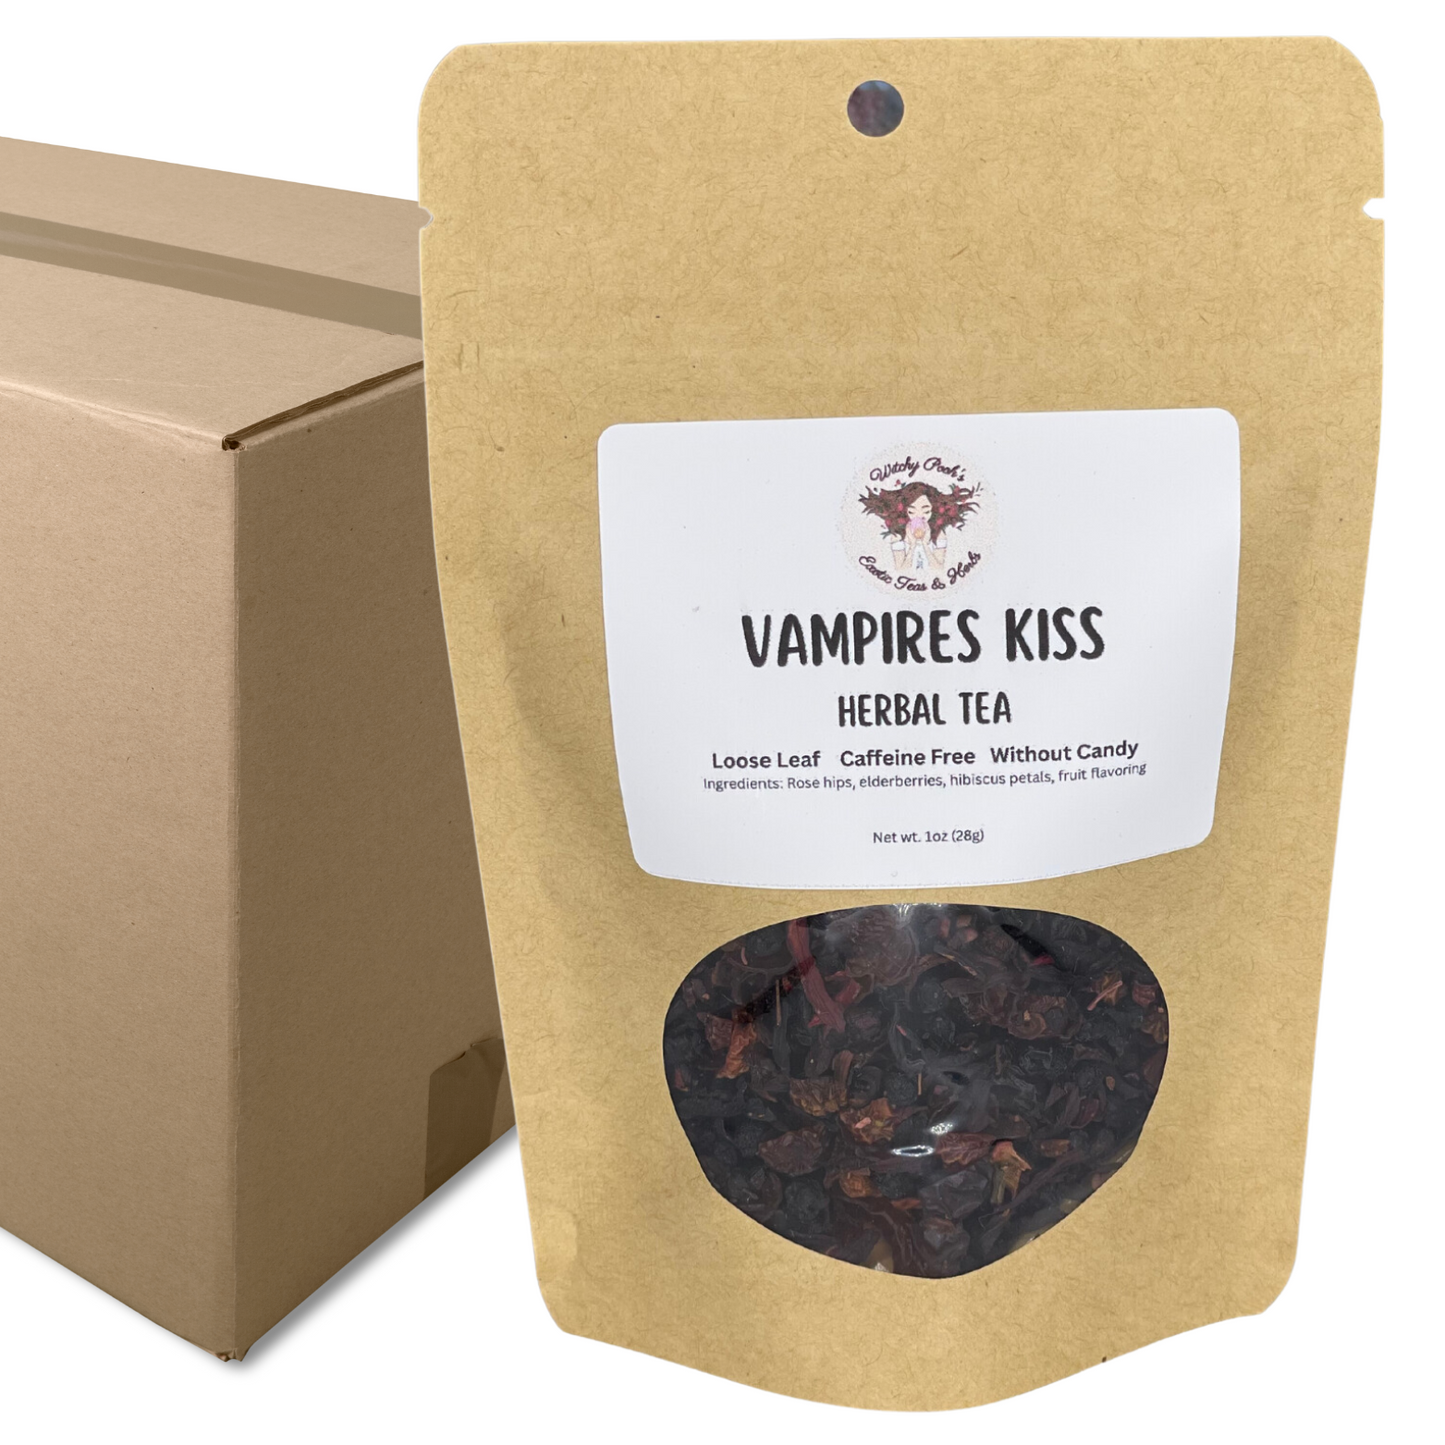 Witchy Pooh's Vampire's Kiss Loose Leaf Elderberry Fruit Herbal Tea, Caffeine Free